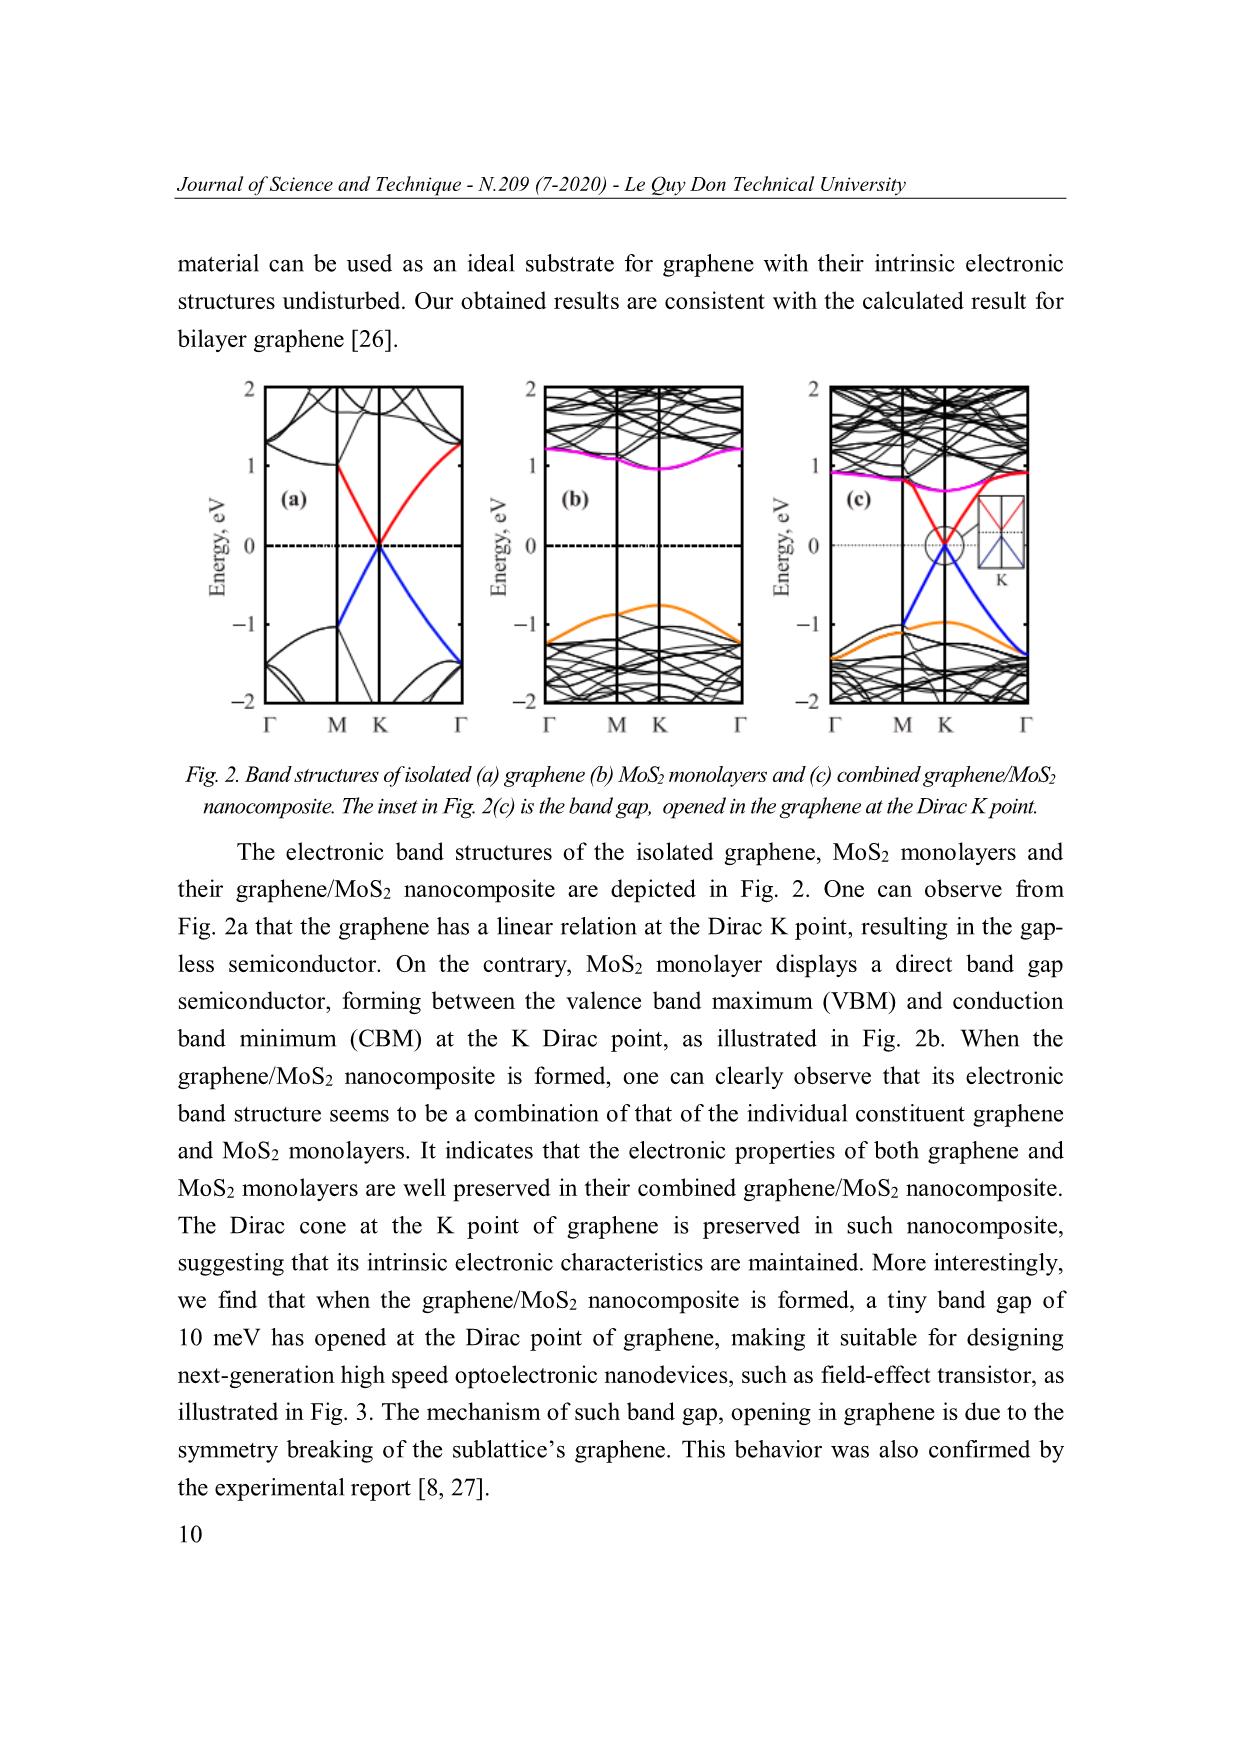 Electronic, optical and mechanical properties of graphene/MoS₂ nanocomposite trang 6